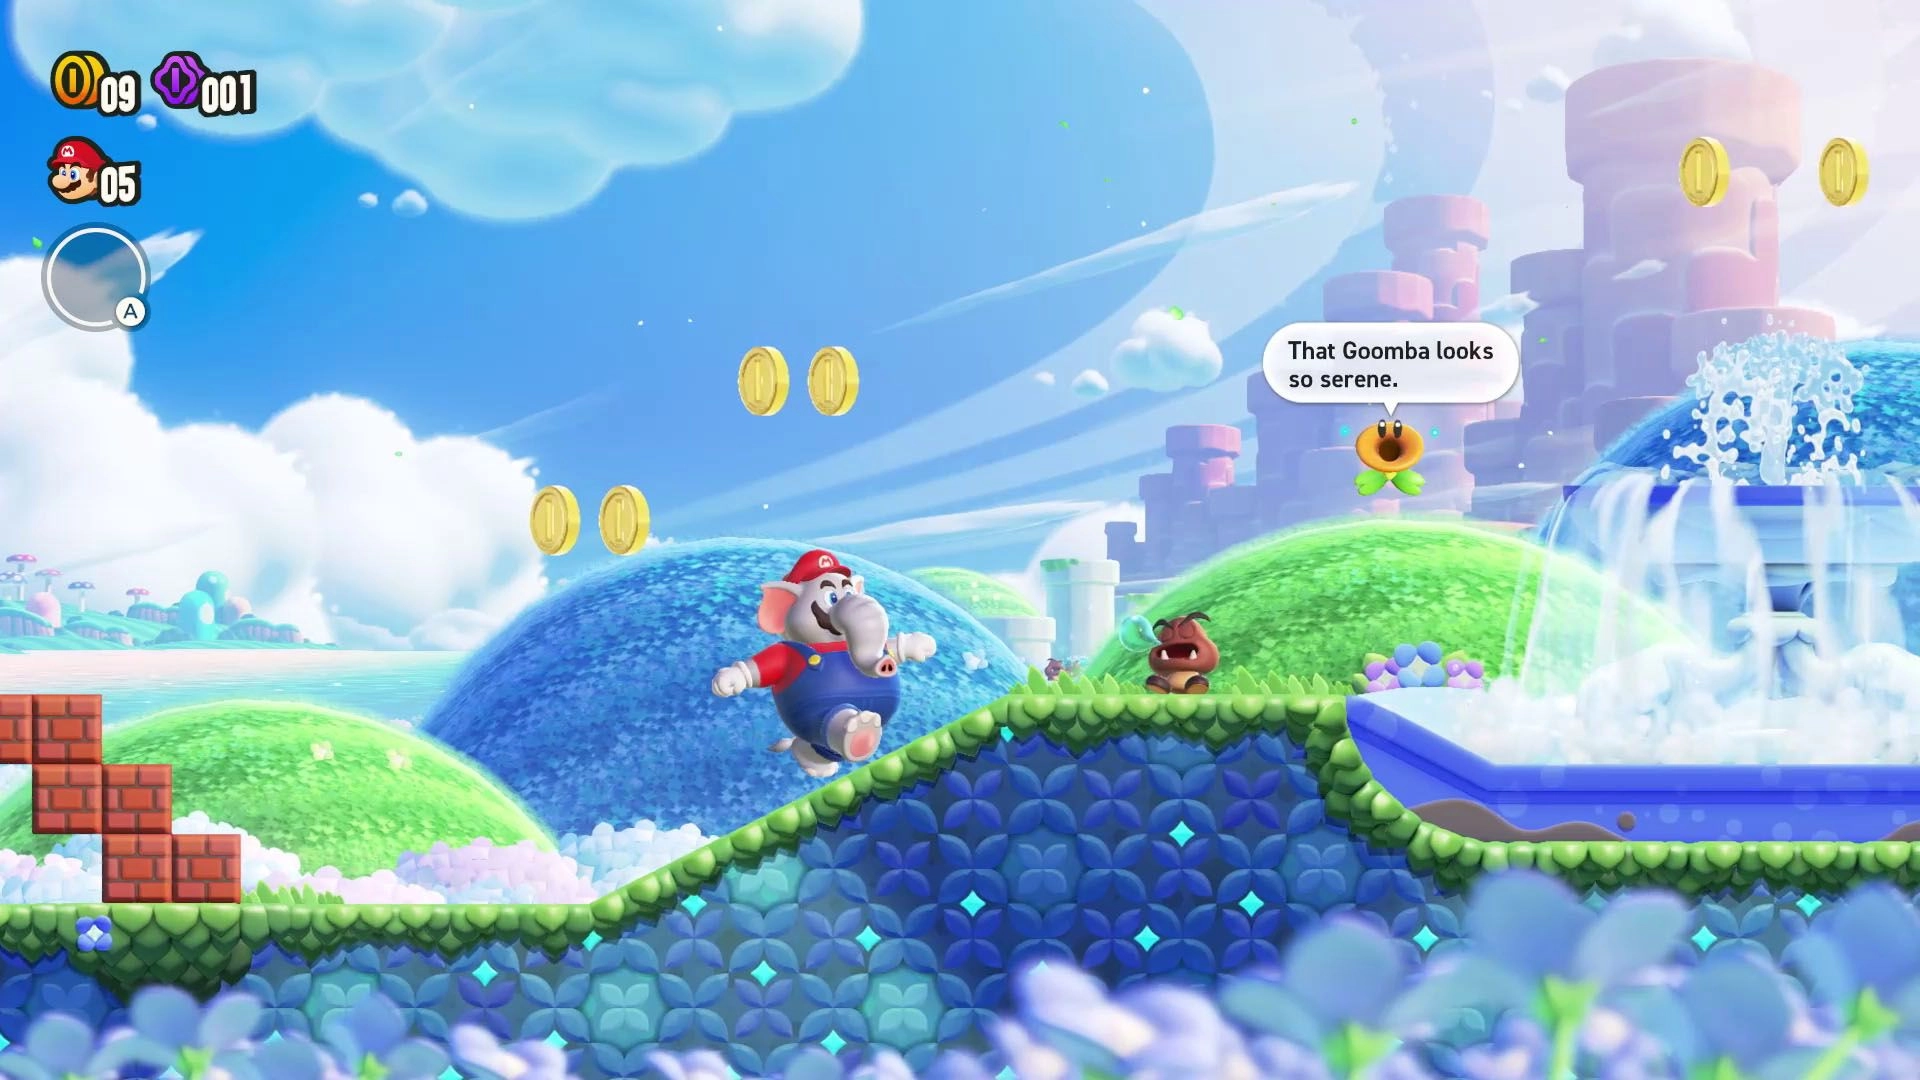 The Untold Tales of Super Mario Bros. Wonder's Development